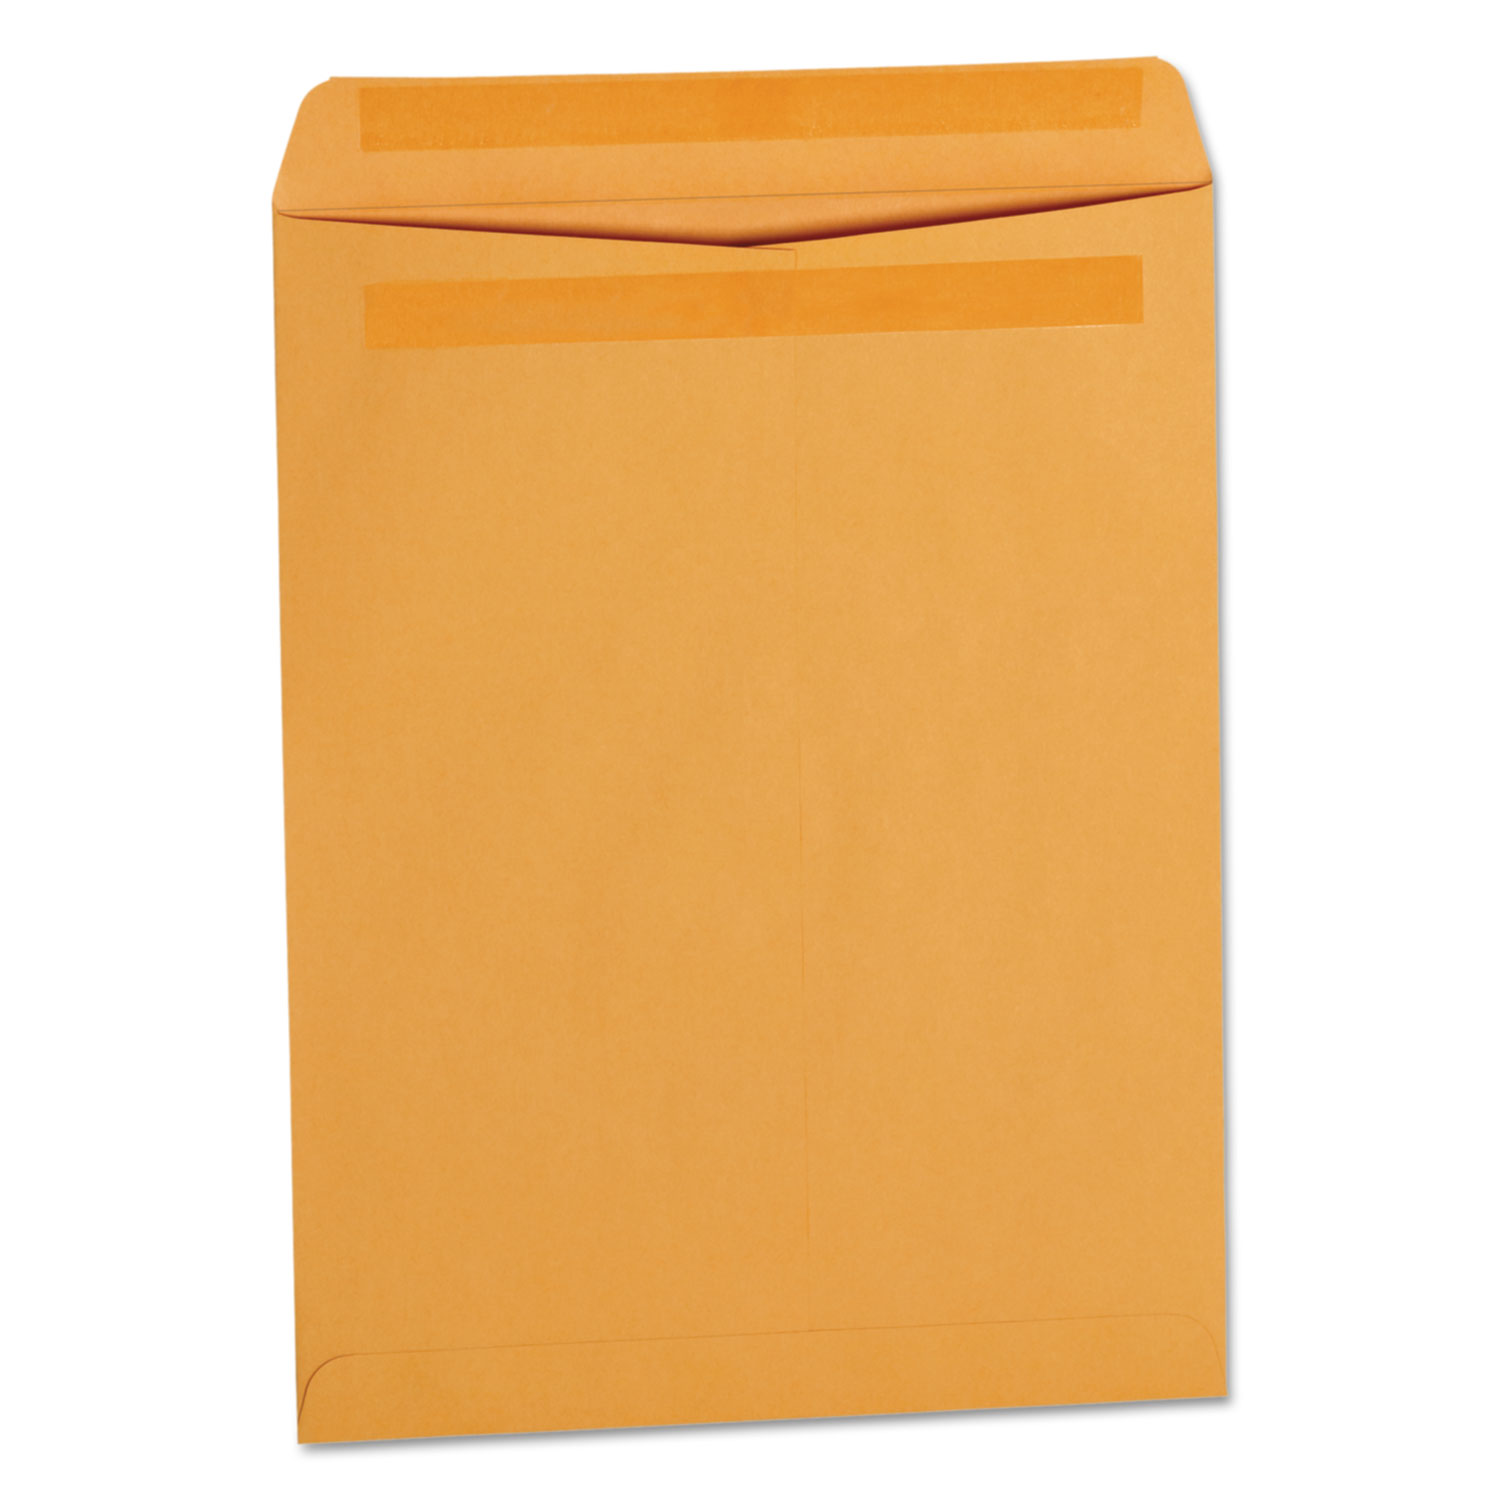  Universal UNV35292 Self-Stick Open-End Catalog Envelope, #13 1/2, Square Flap, Self-Adhesive Closure, 10 x 13, Brown Kraft, 250/Box (UNV35292) 